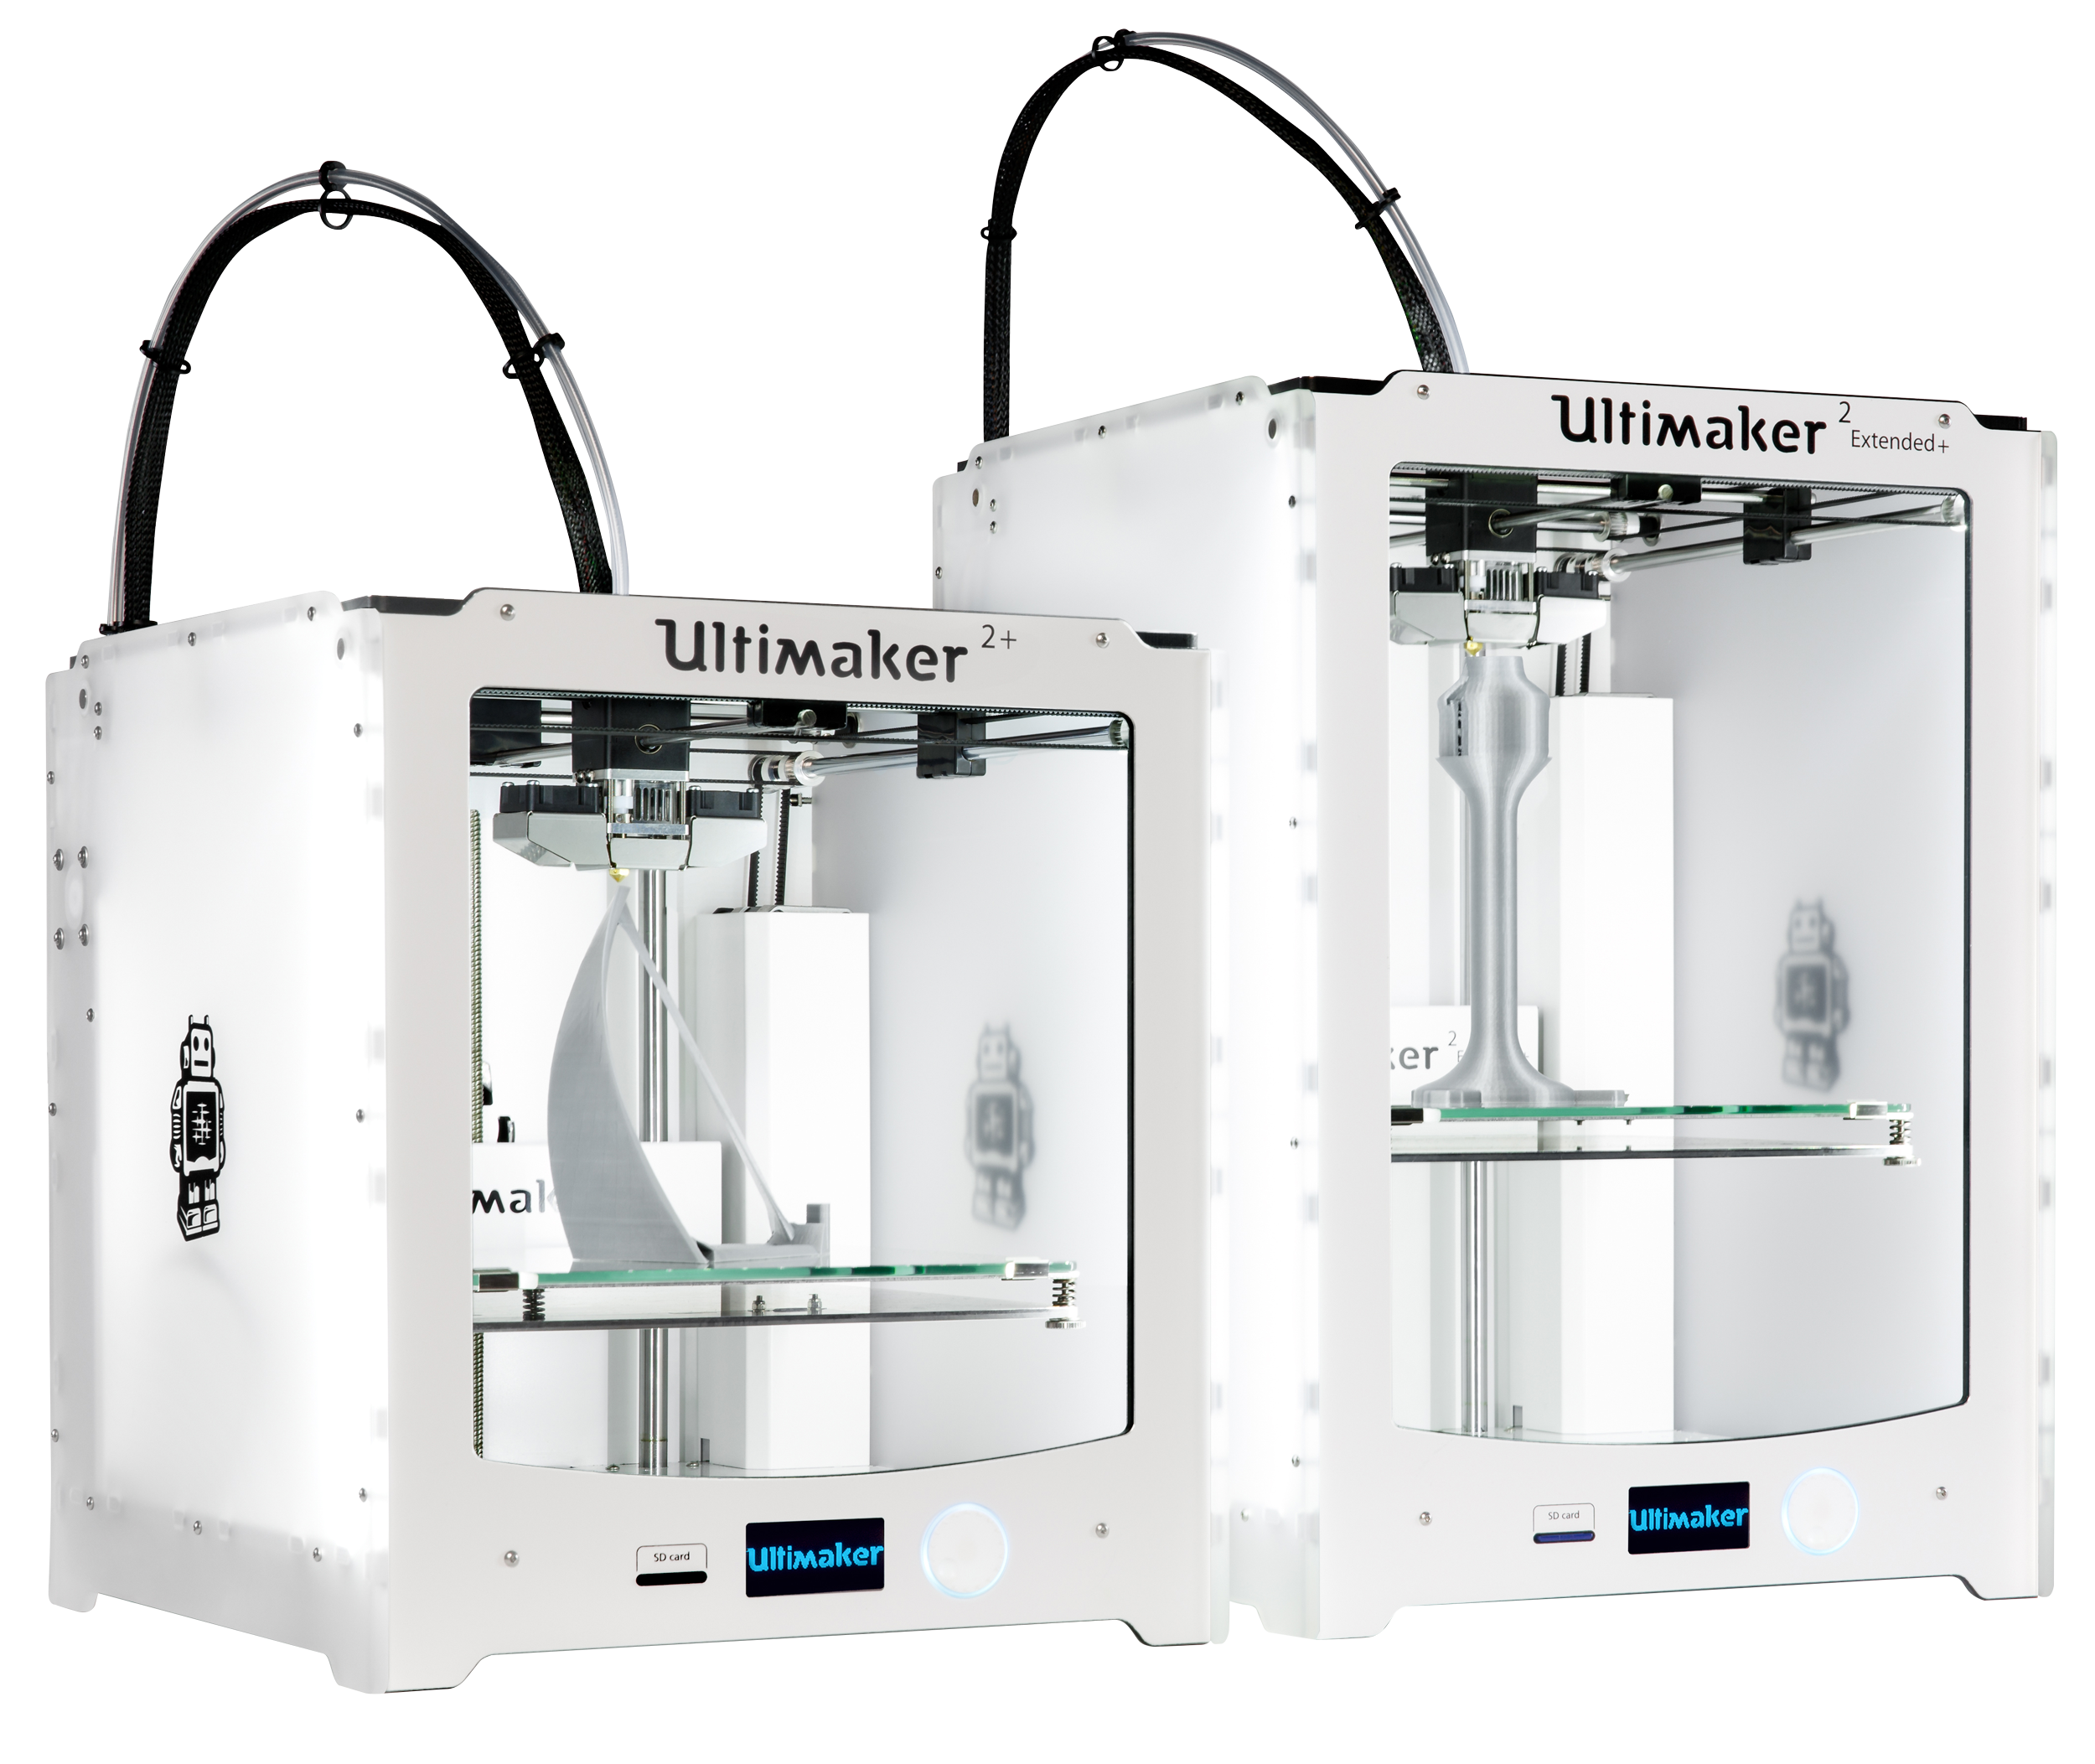 Ultimaker 2+ printer